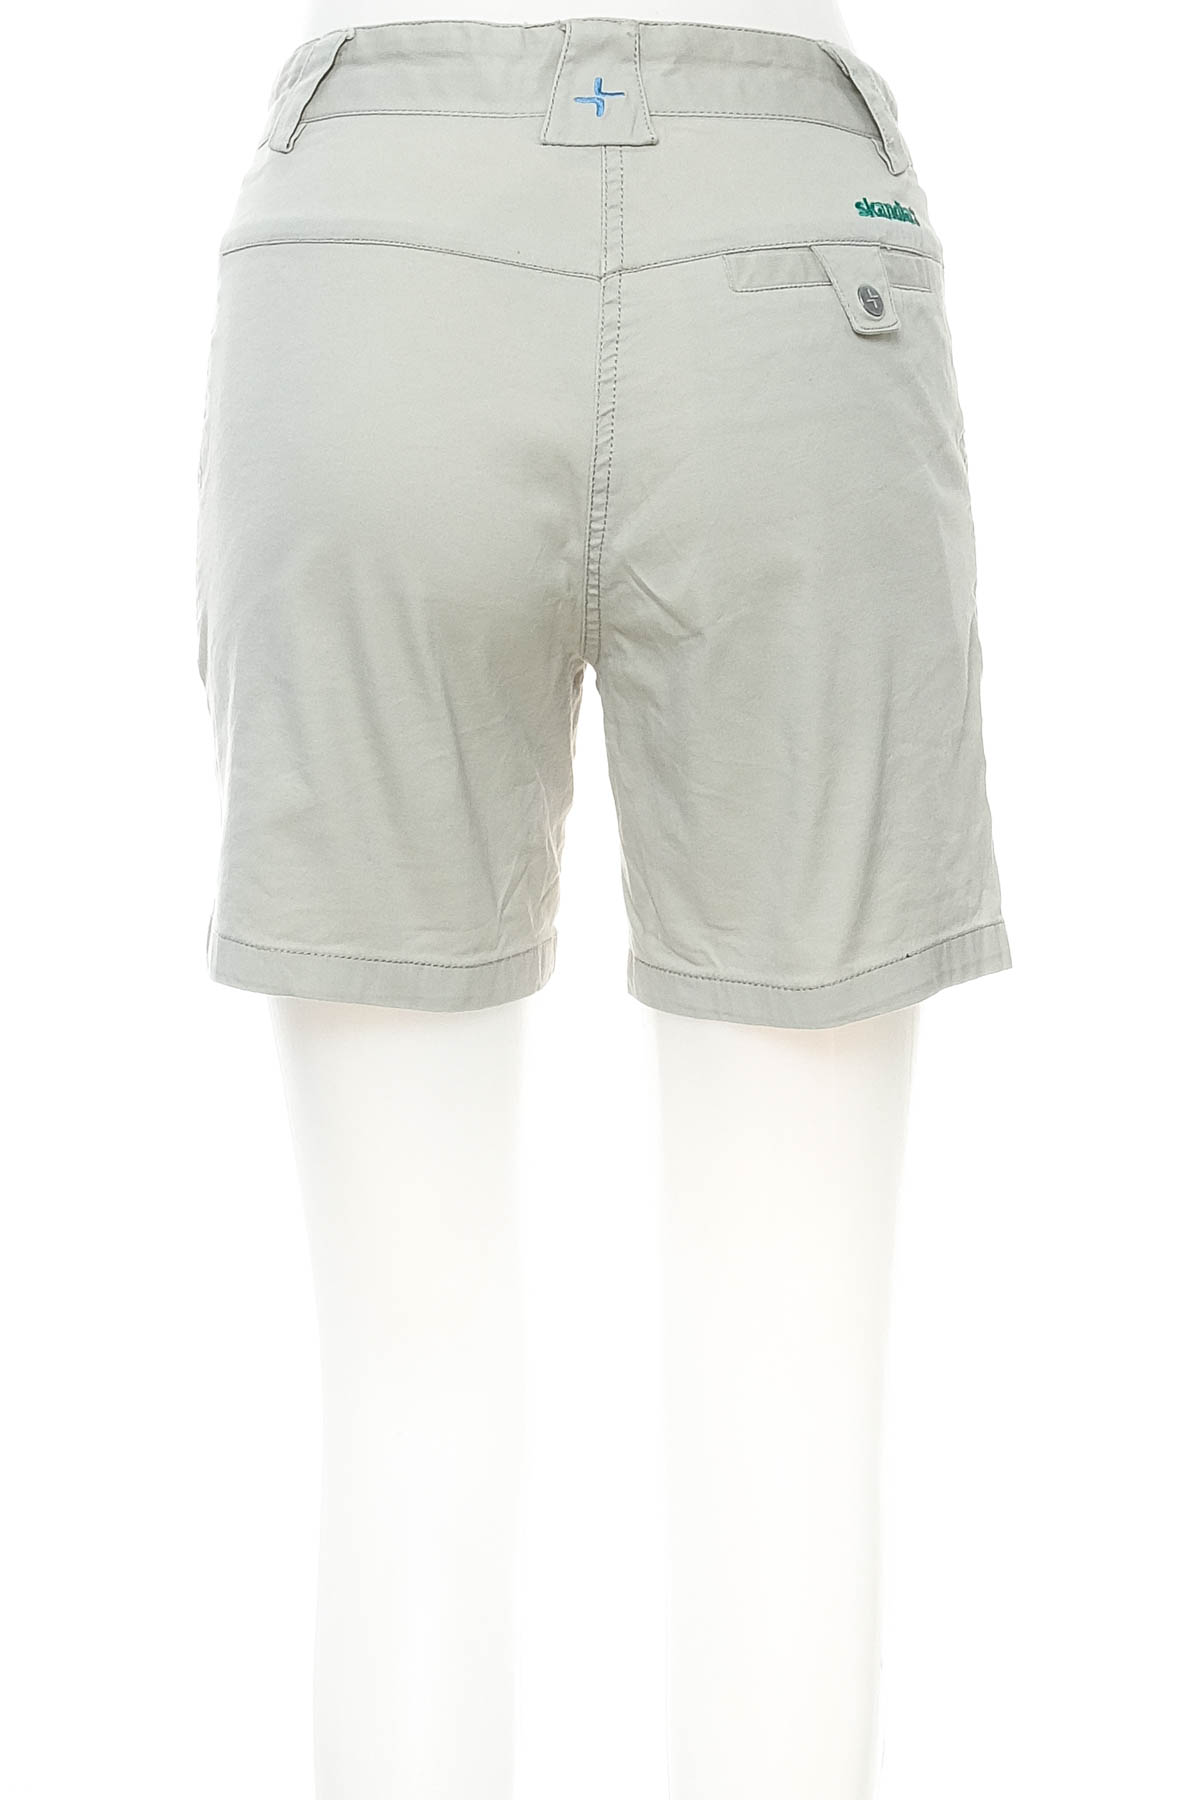 Female shorts - CROSS - 1